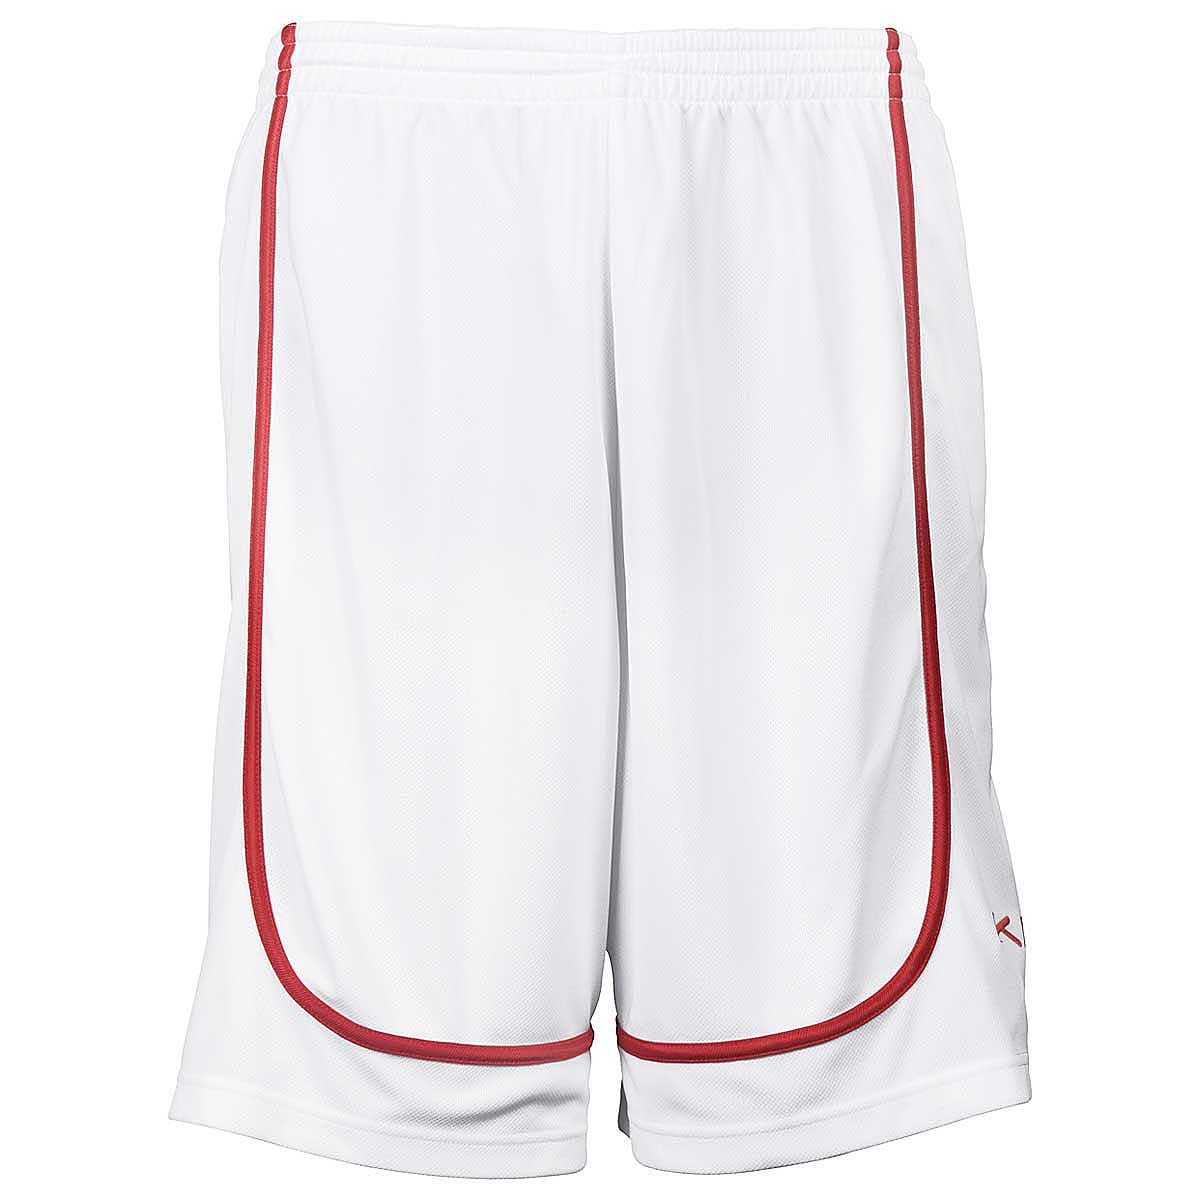 K1X Hardwood League Uniform Shorts, White/True Red